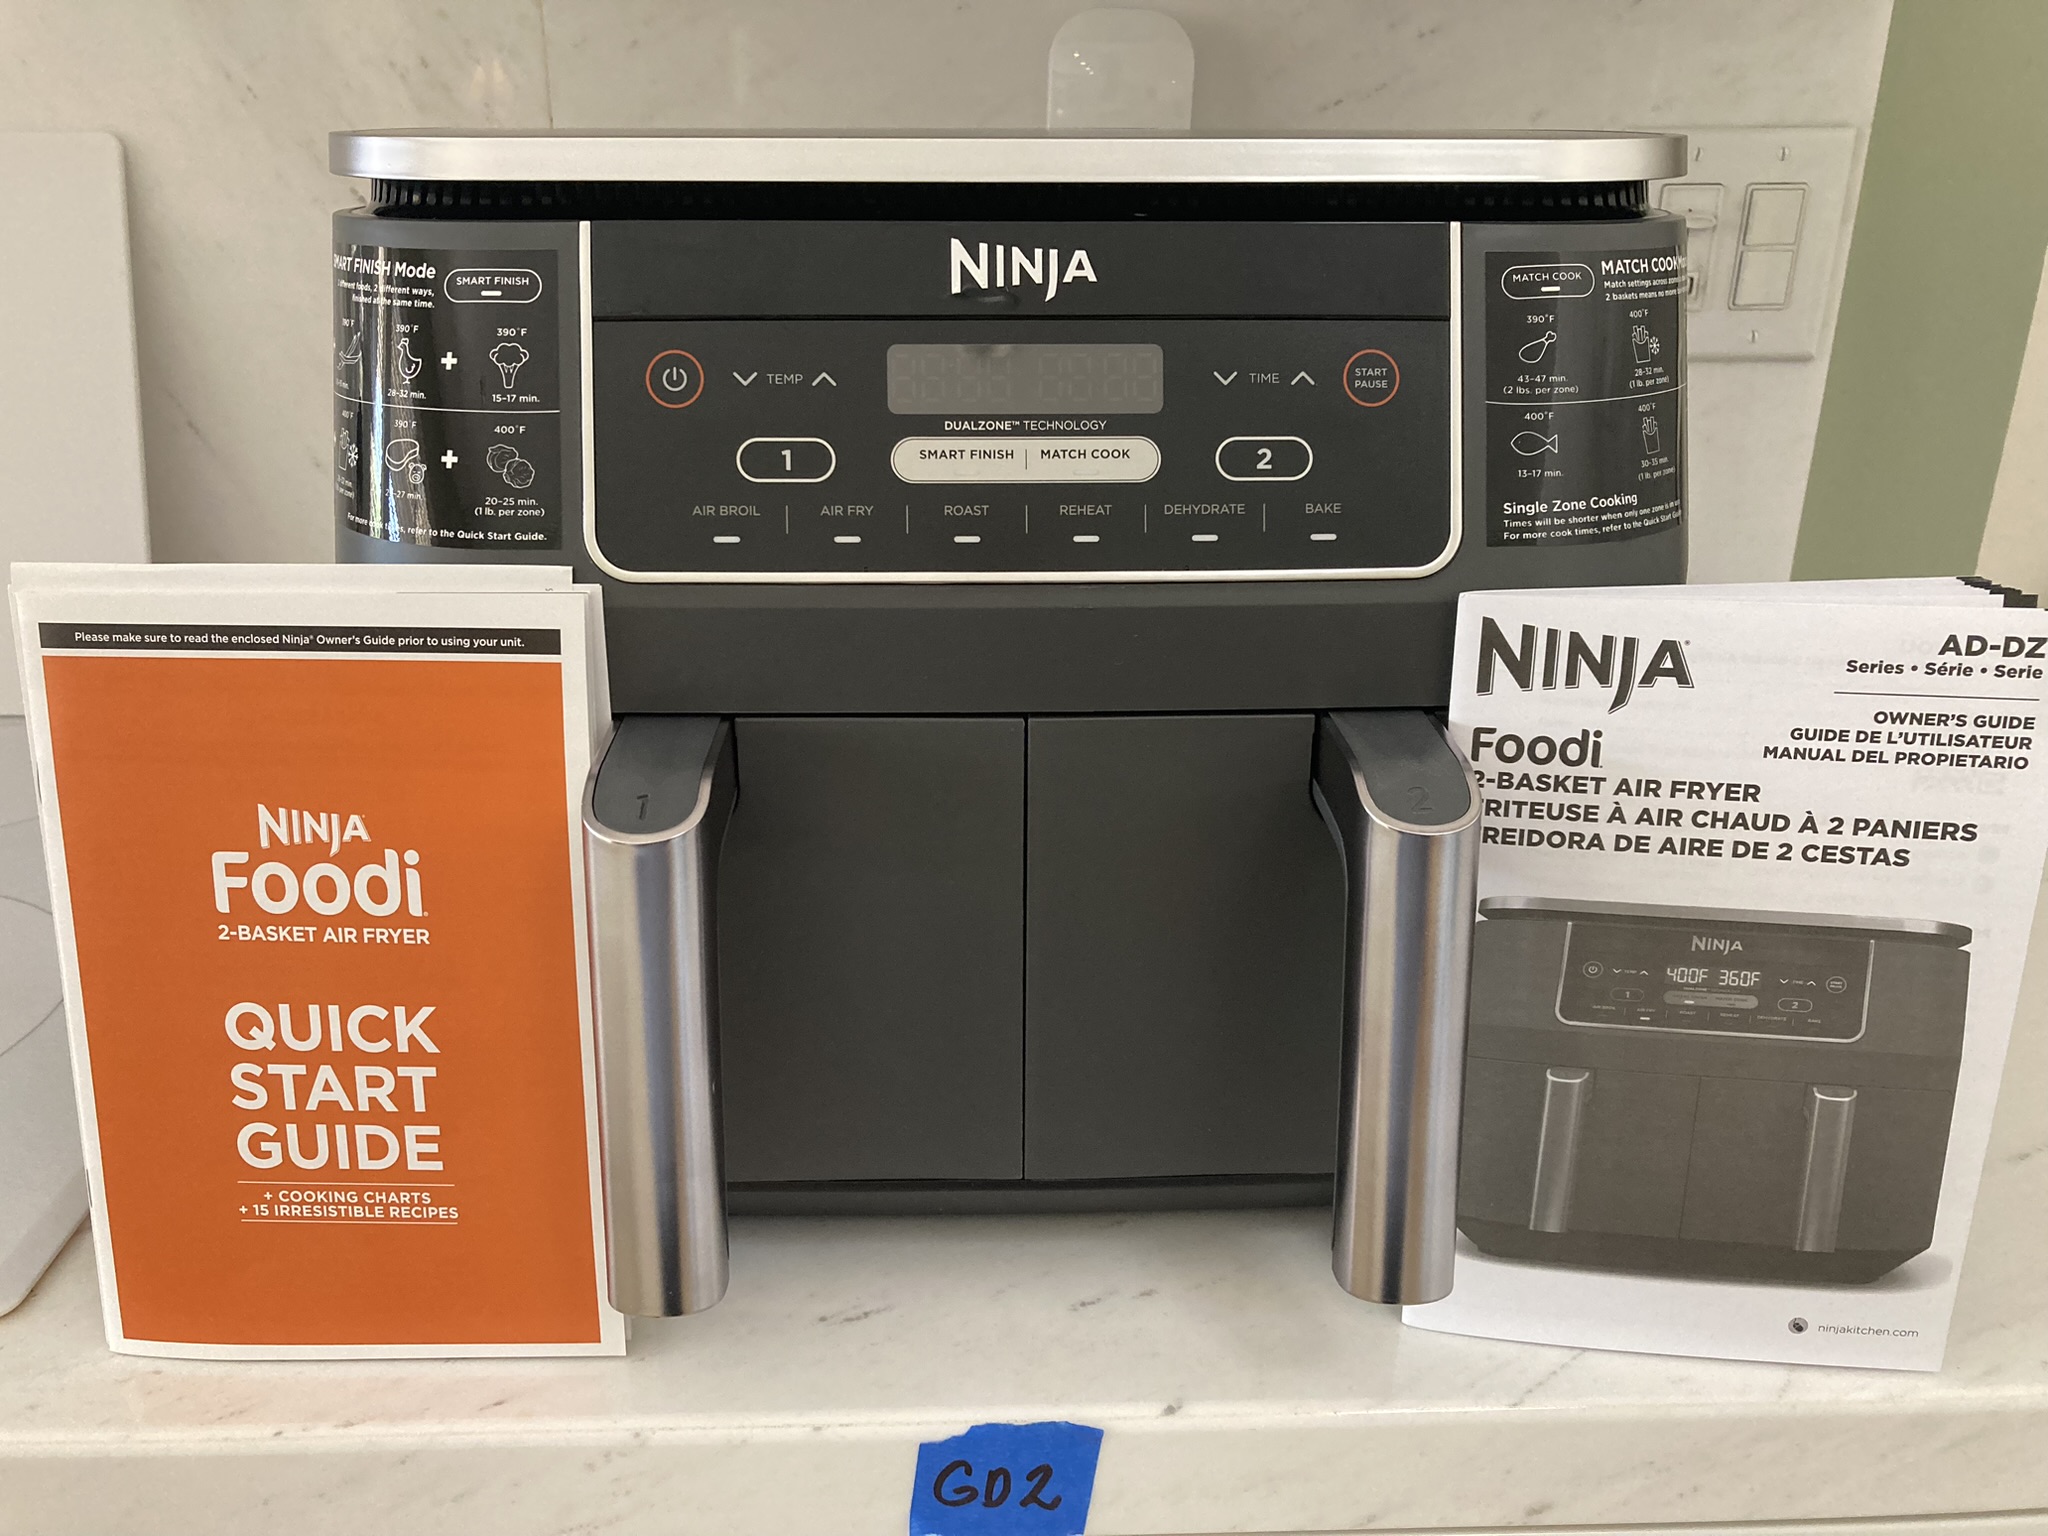 Sound Auction Service - Auction: 11/20/23 Collectibles, Commercial,  Arts/Crafts Online Auction ITEM: Ninja AF100 Air Fryer